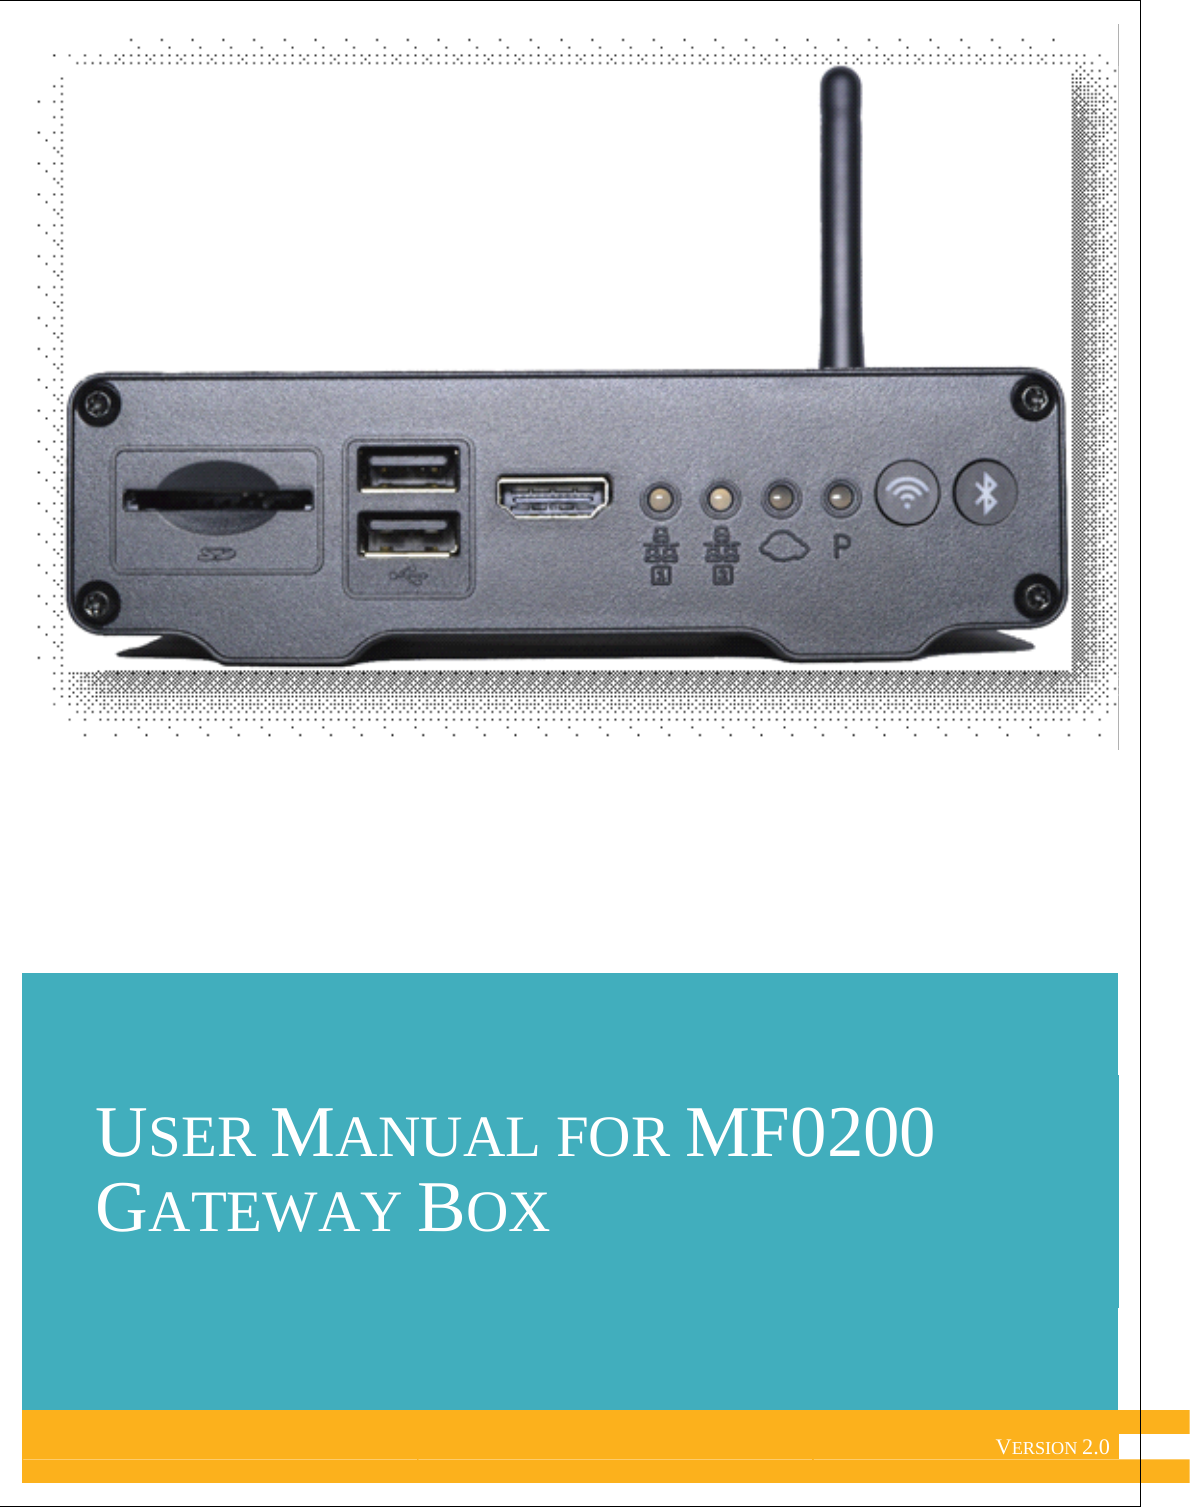 død Baby resident Mentor Graphics CSPBOXMF0200A CSP Gateway Box User Manual